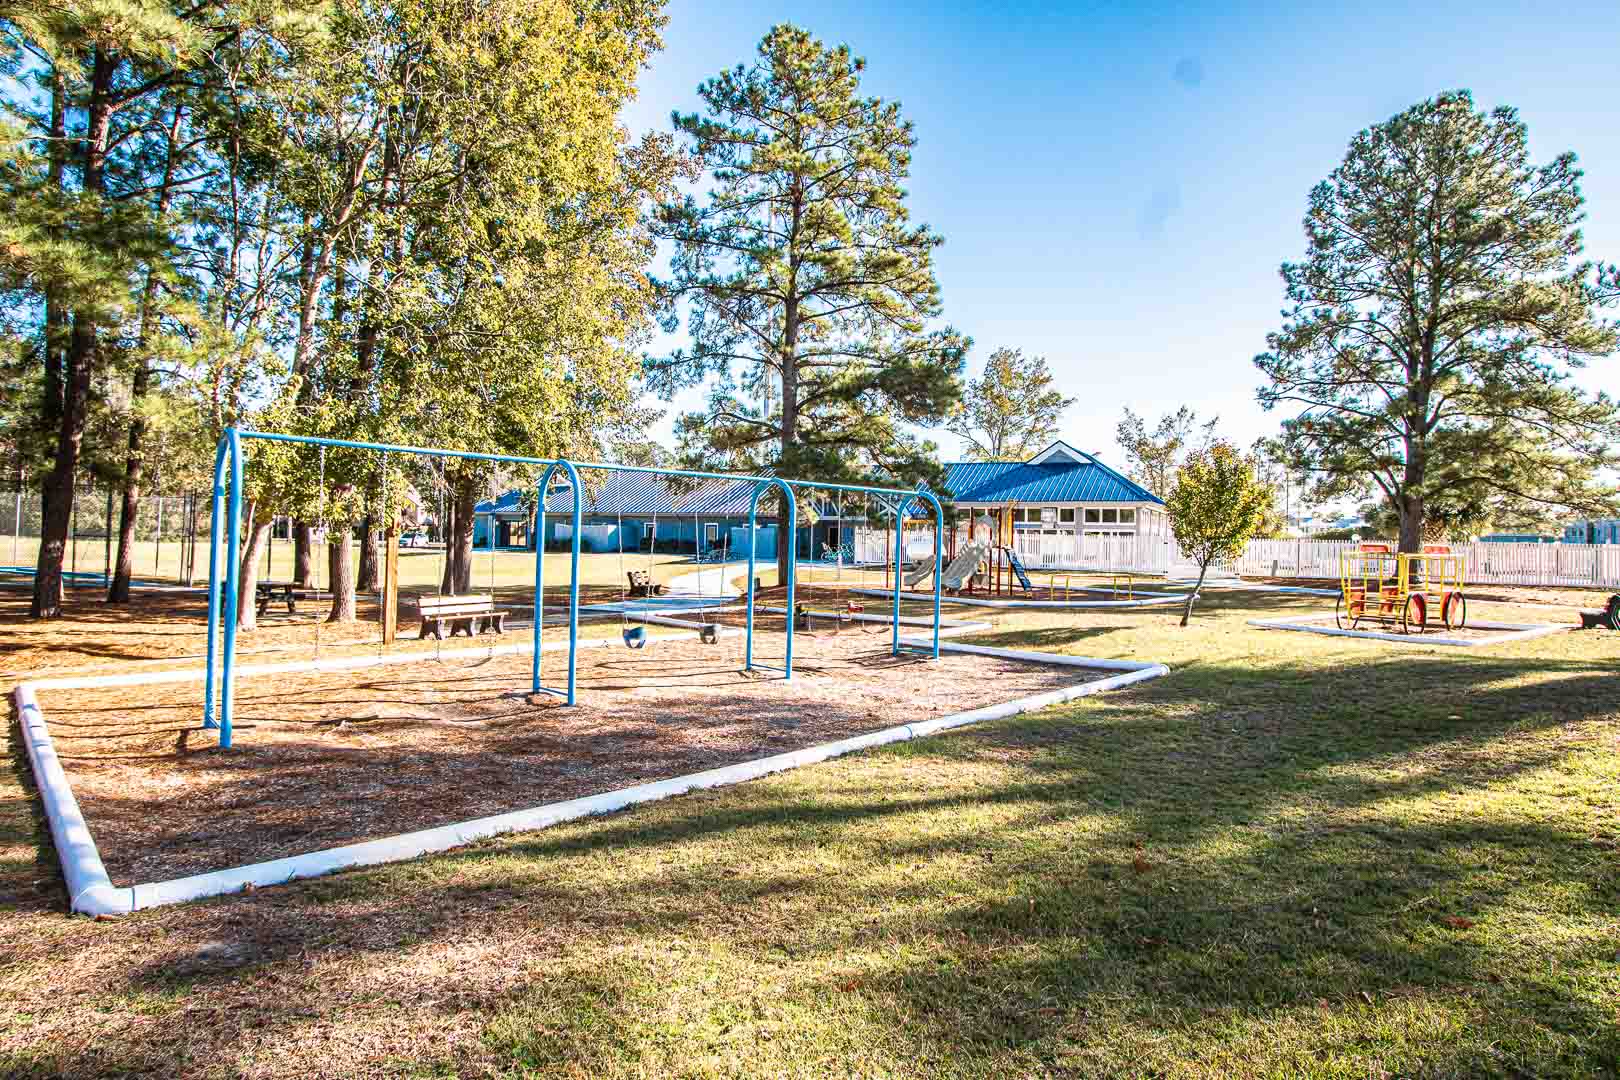 An outdoor children's playground at VRI's Sandcastle Village in New Bern, North Carolina.